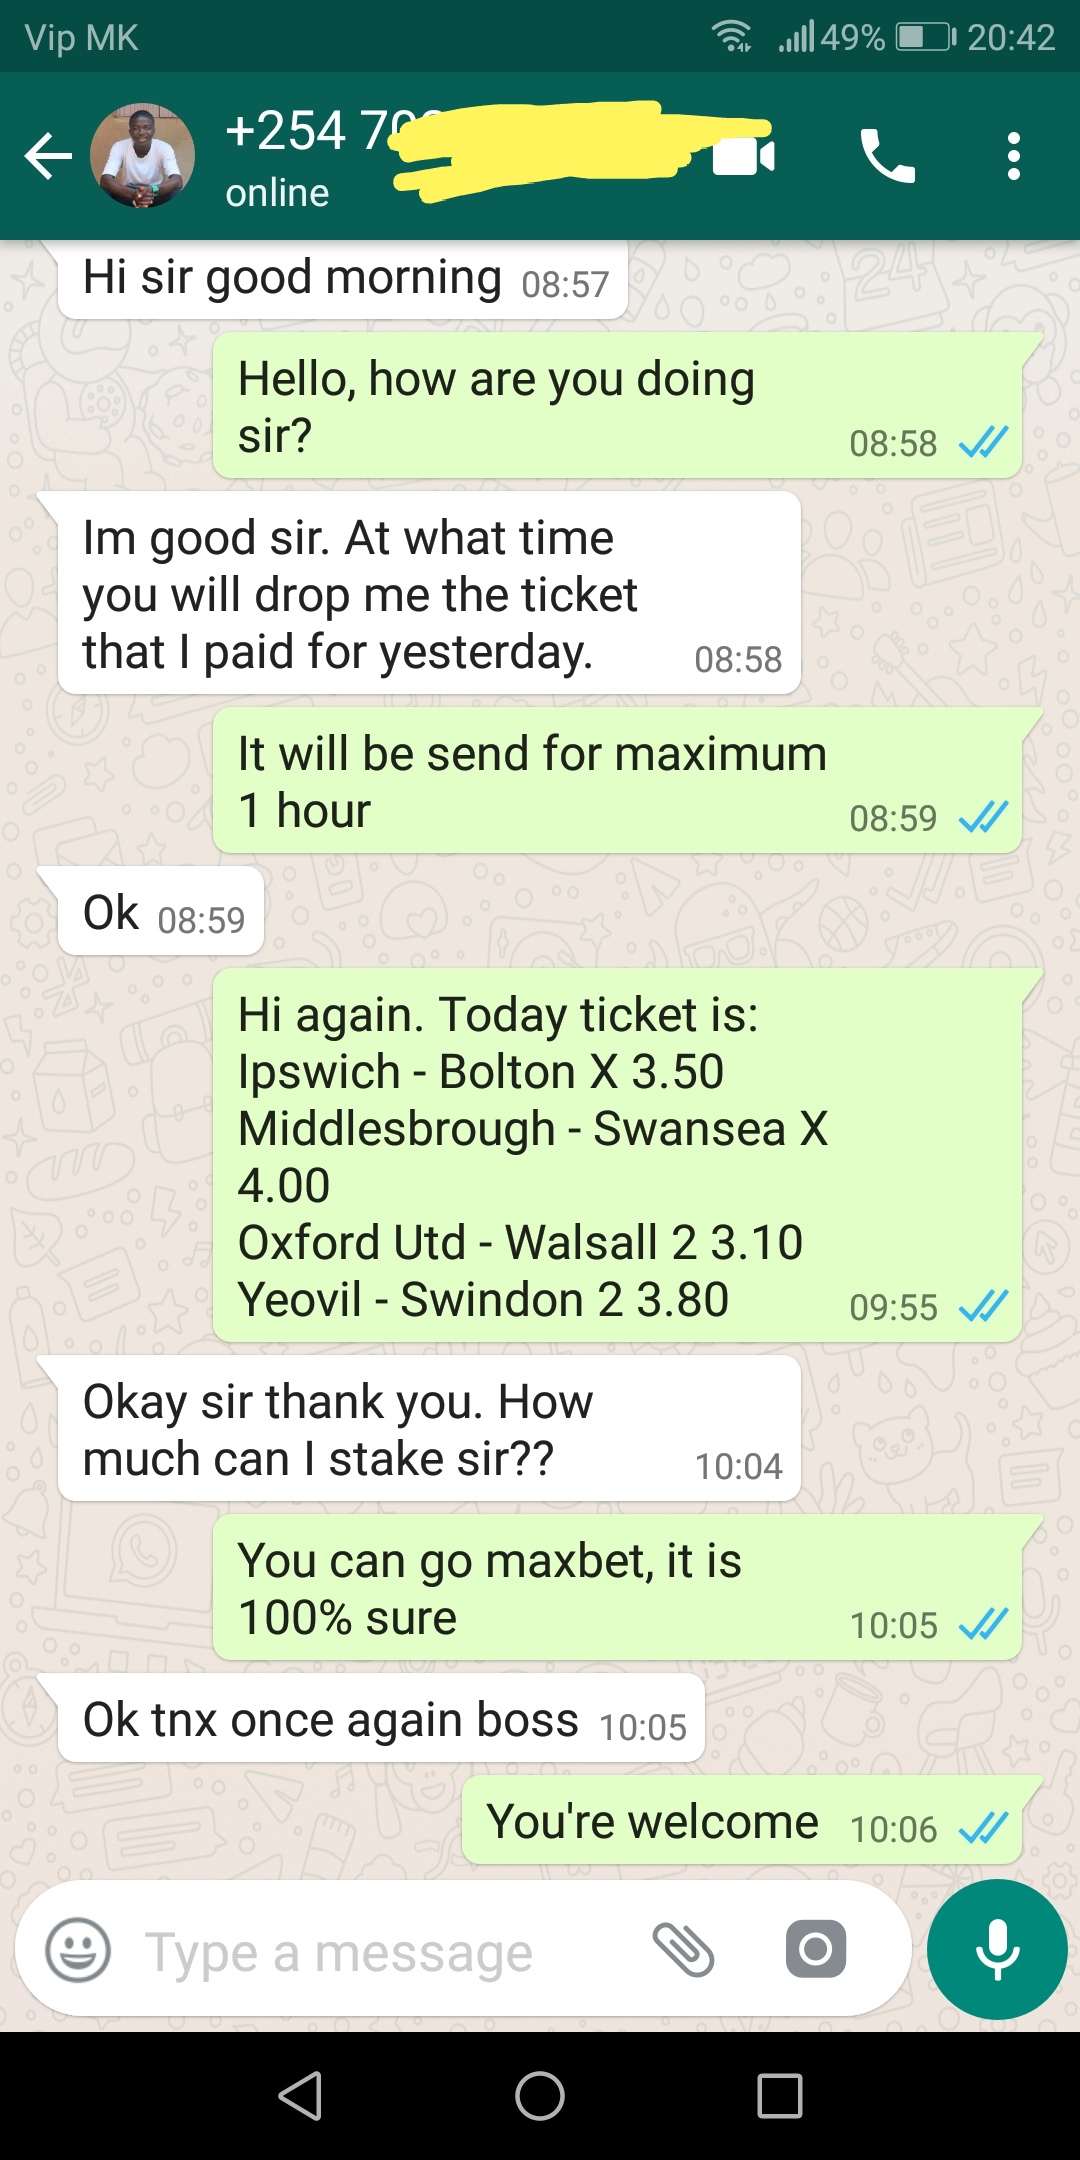 http://pro-soccertip.com/wp-content/uploads/2018/09/WhatsApp-proof-ticket-22-09-2018.jpg